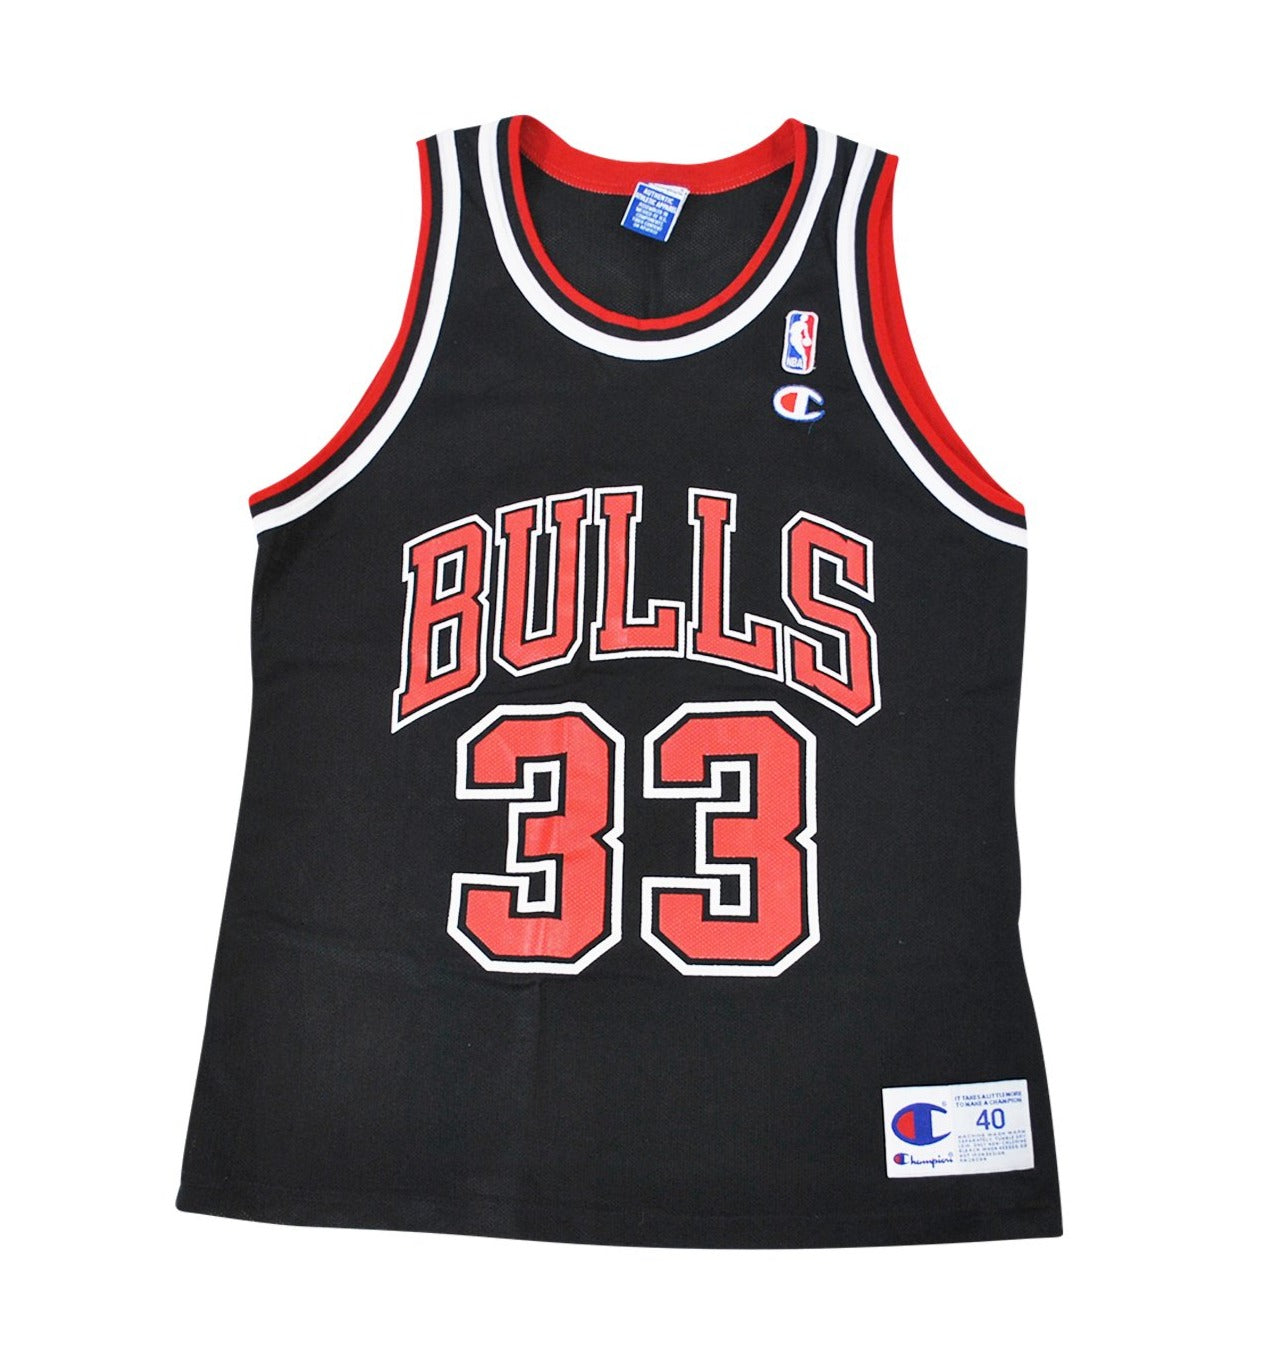 Scottie Pippen Chicago Bulls White Throwback Basketball Jersey.